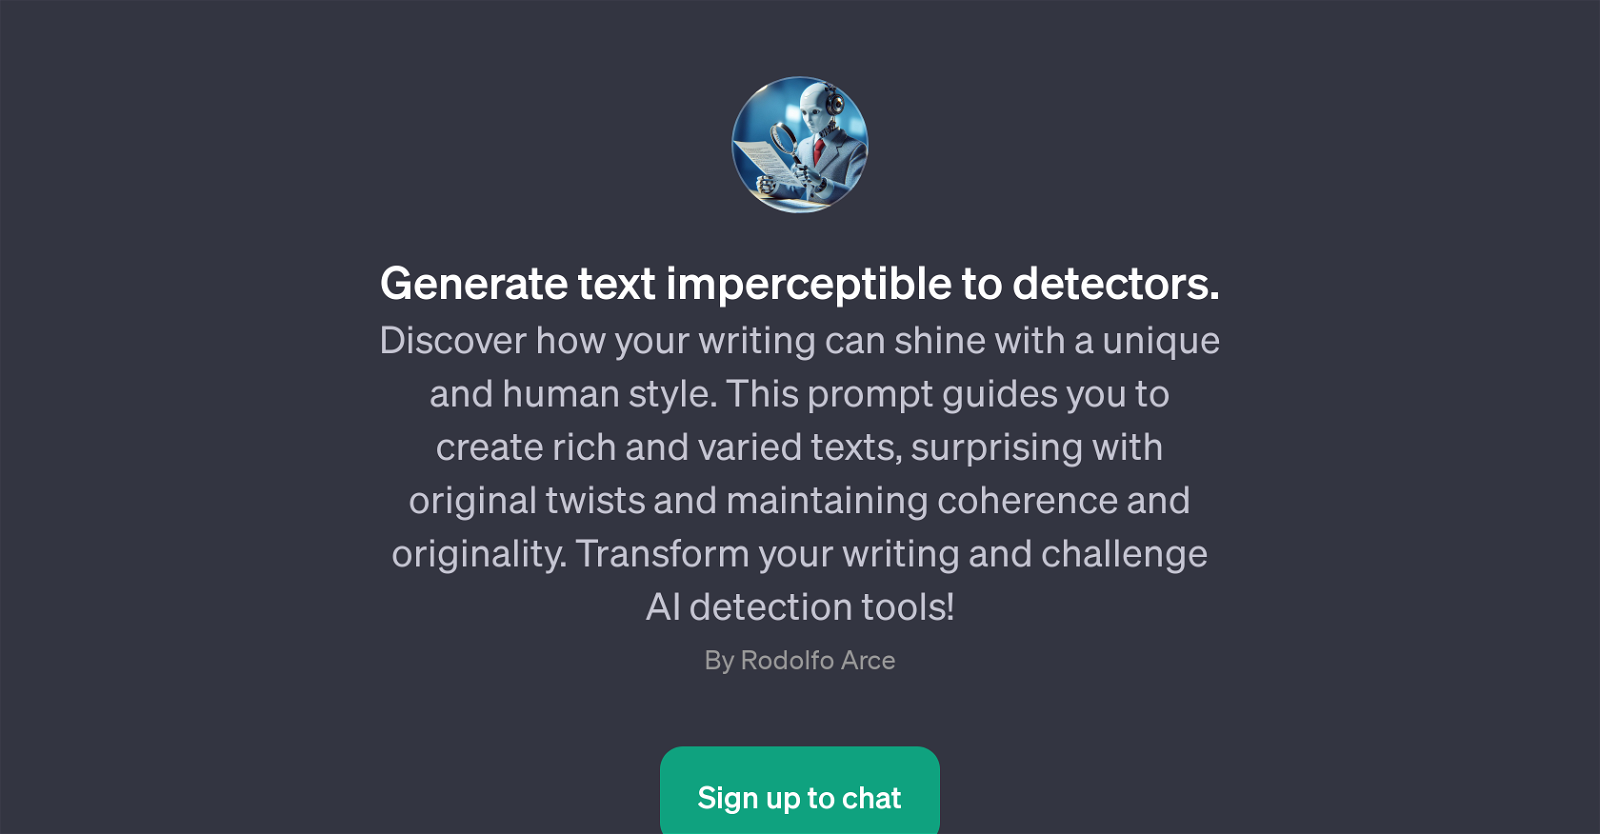 Generate text imperceptible to detectors website